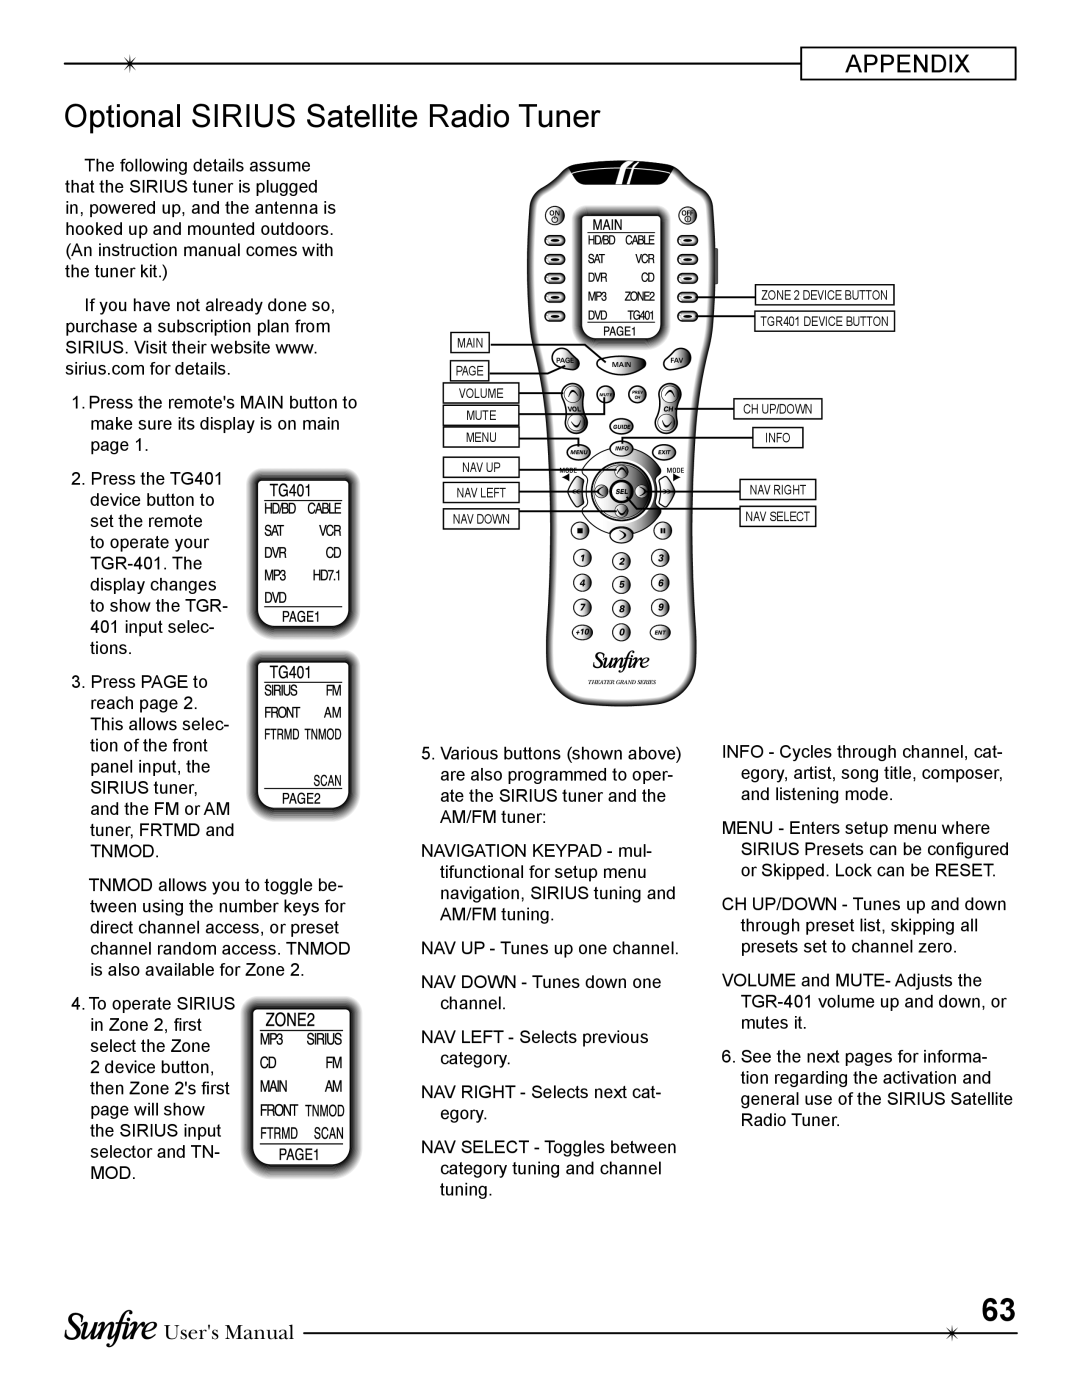 Sunfire TGR-401-230 manual Optional SIRIUS Satellite Radio Tuner, Users Manual 